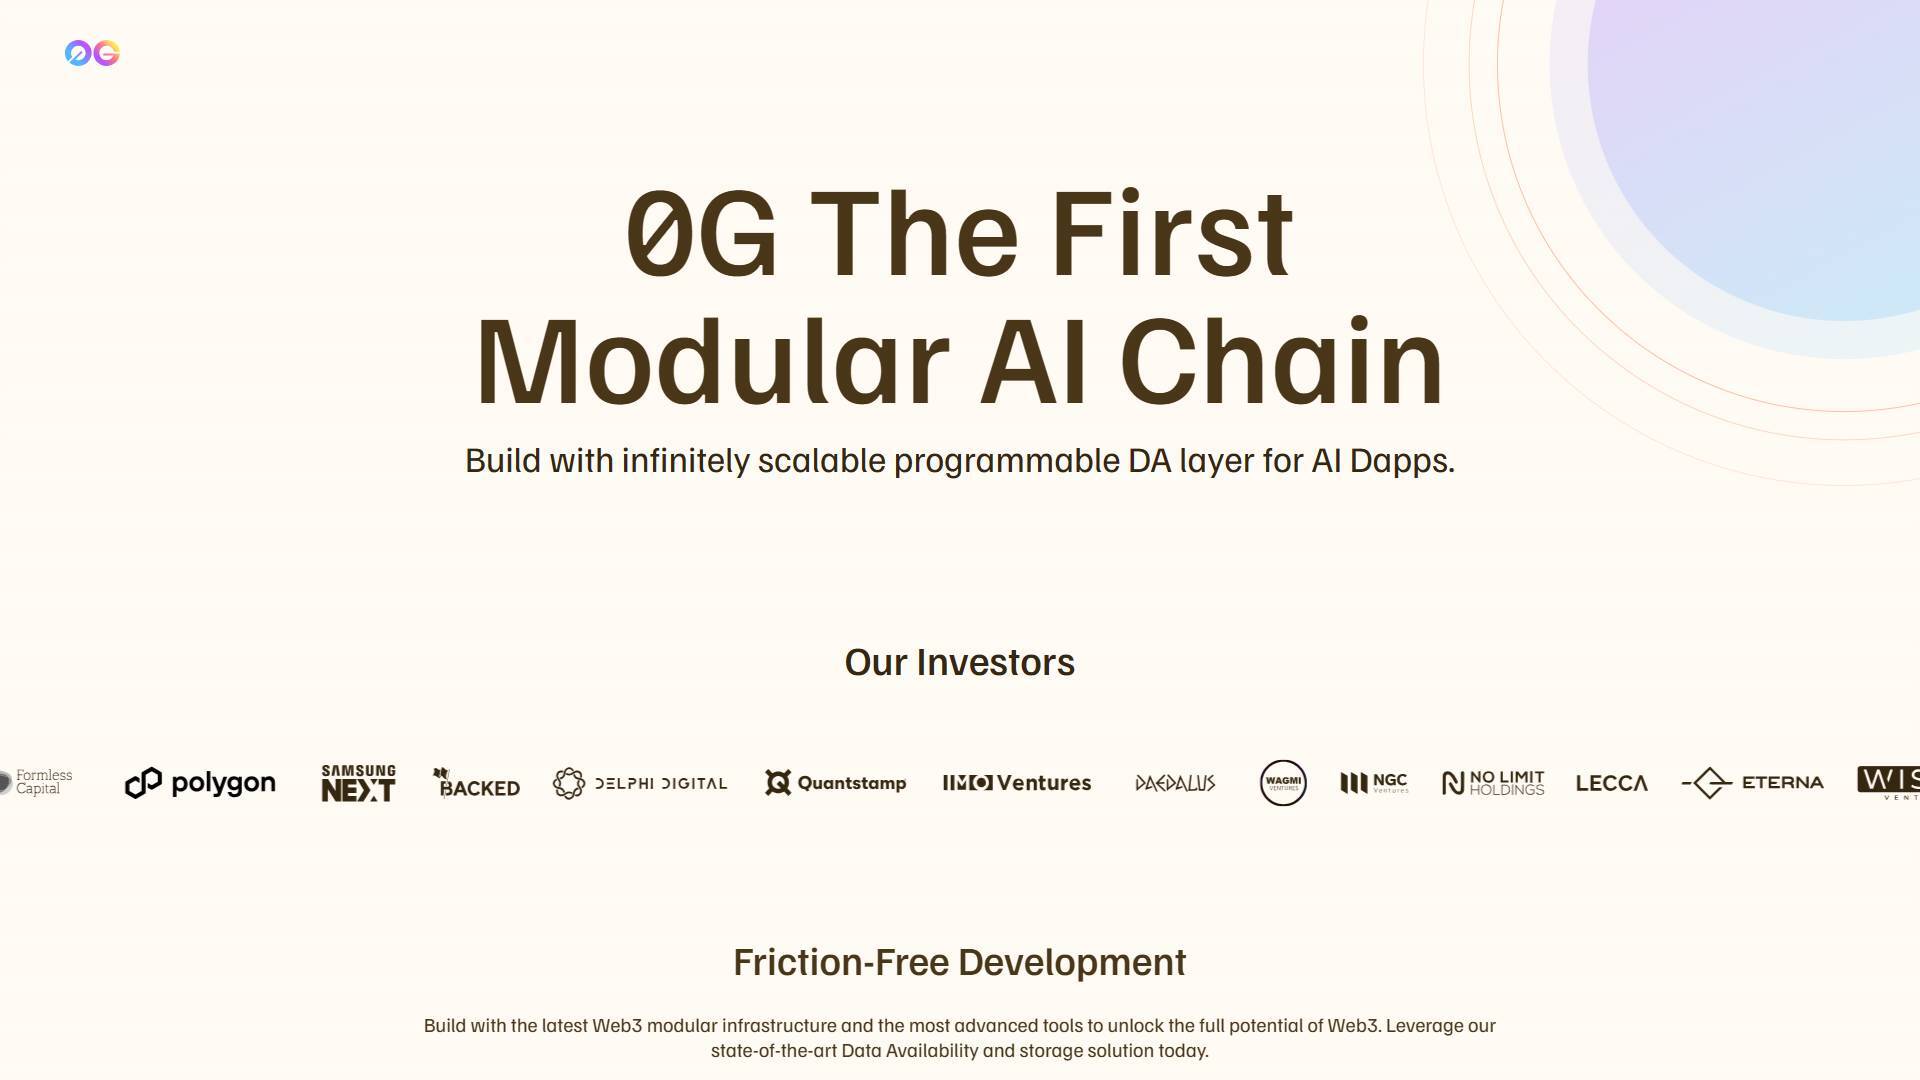 Modular Blockchain 0g Labs Gọi Vốn Pre-seed 35 Triệu Usd